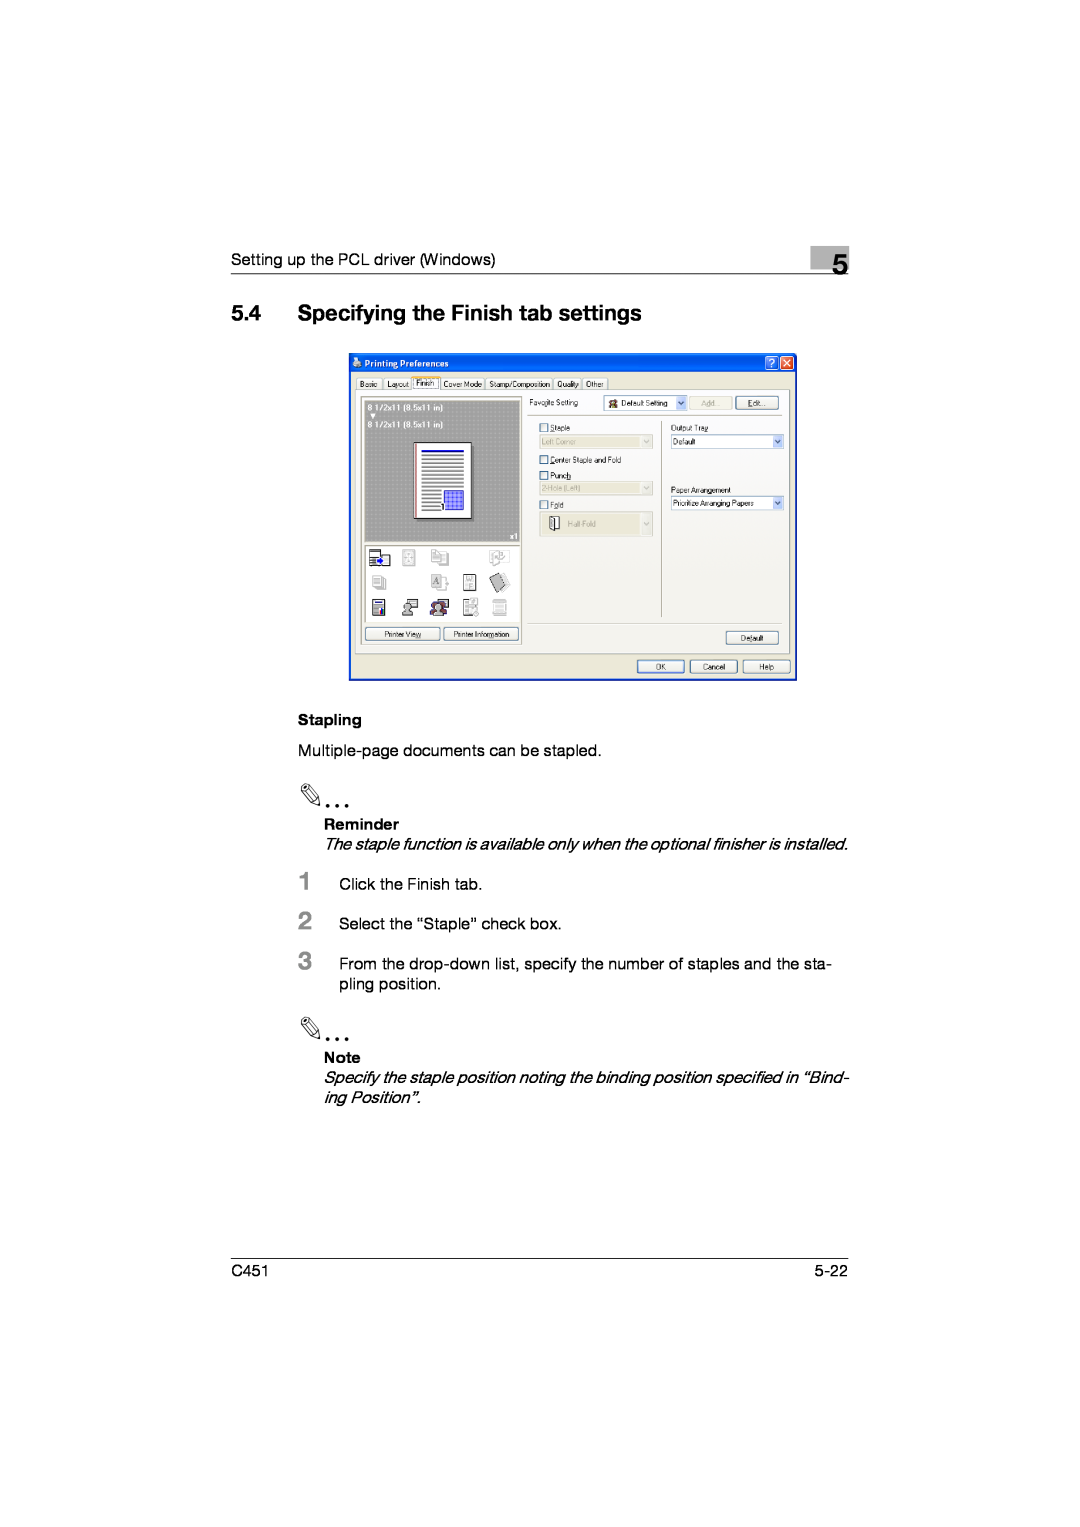 Konica Minolta C451 manual 5.4Specifying the Finish tab settings, Stapling, Reminder 